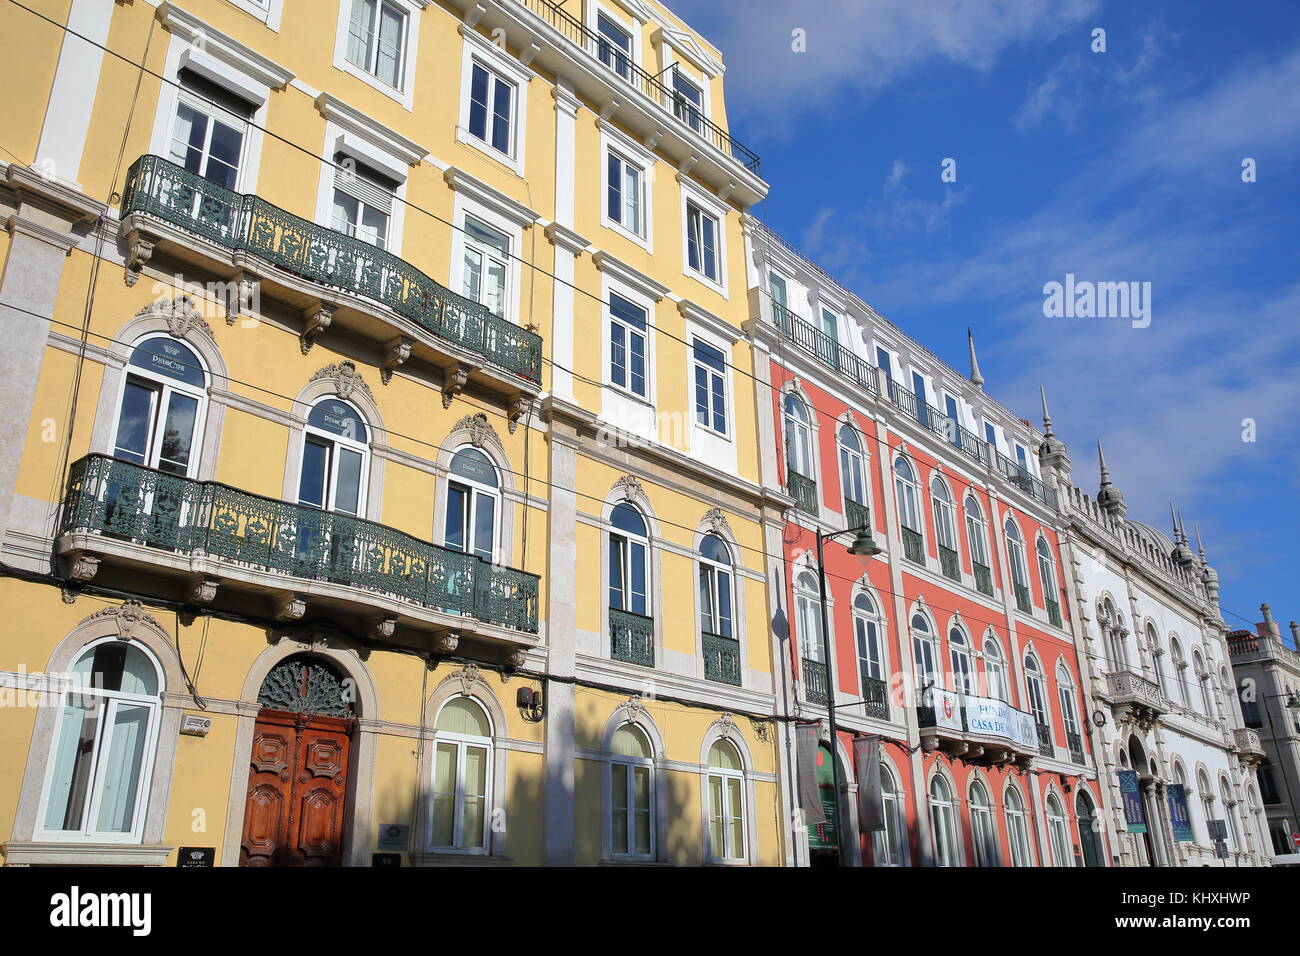 LISBON, PORTUGAL - NOVEMBER 4, 2017: Colorful facades at Principe Real square in Bairro Alto neighborhood Stock Photo